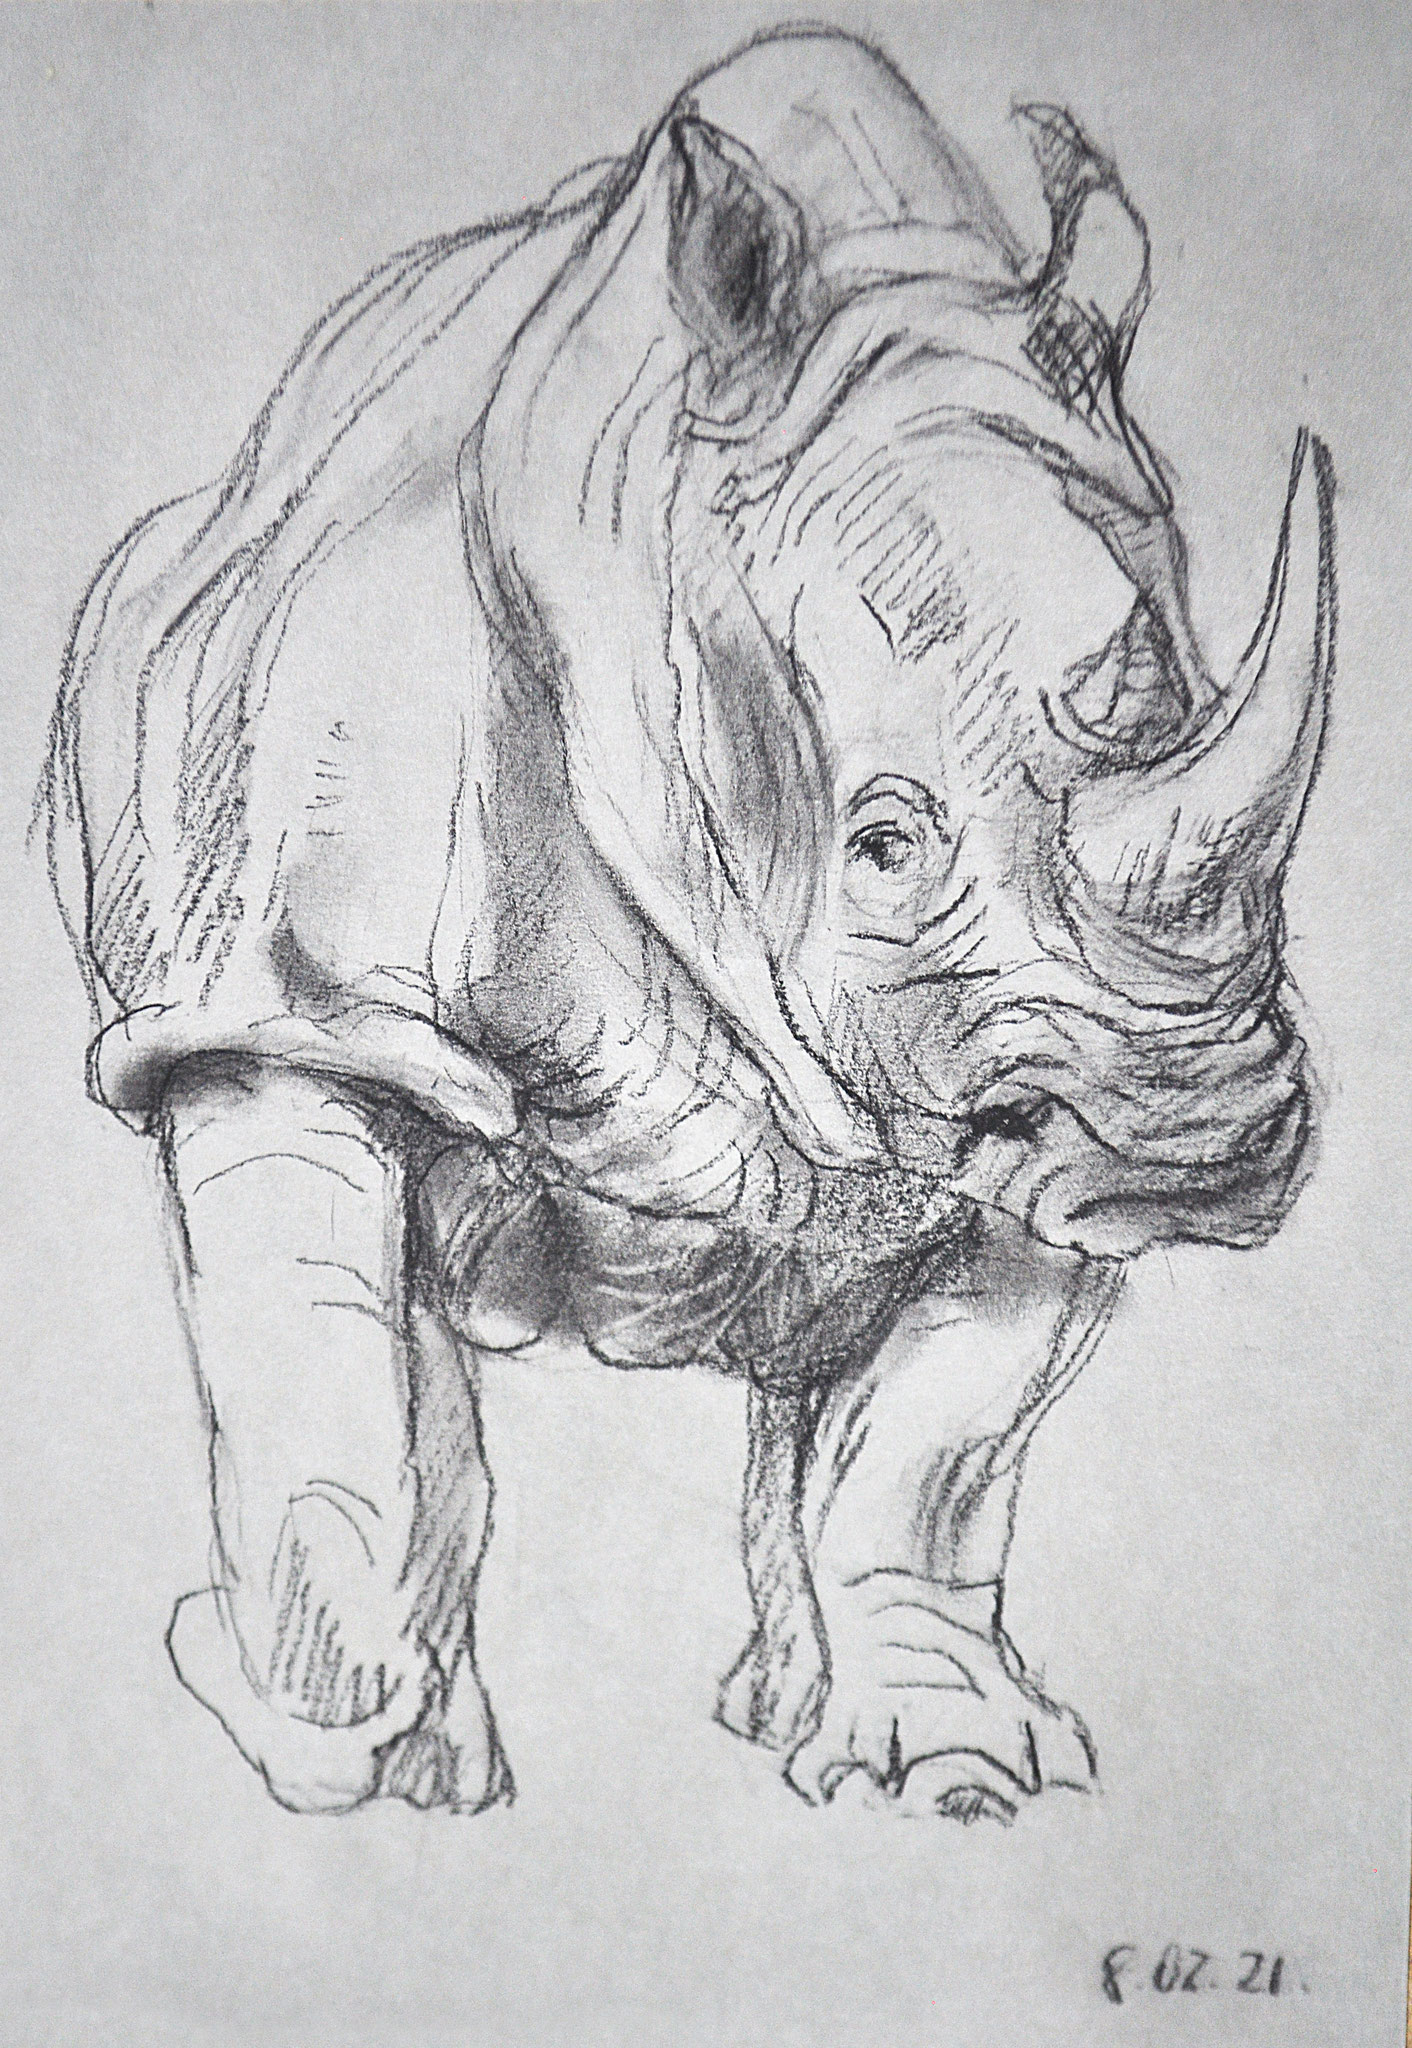 Großes Nashorn. Kohle auf getöntem Papier, 2021. Format: 21 x 29,7 cm